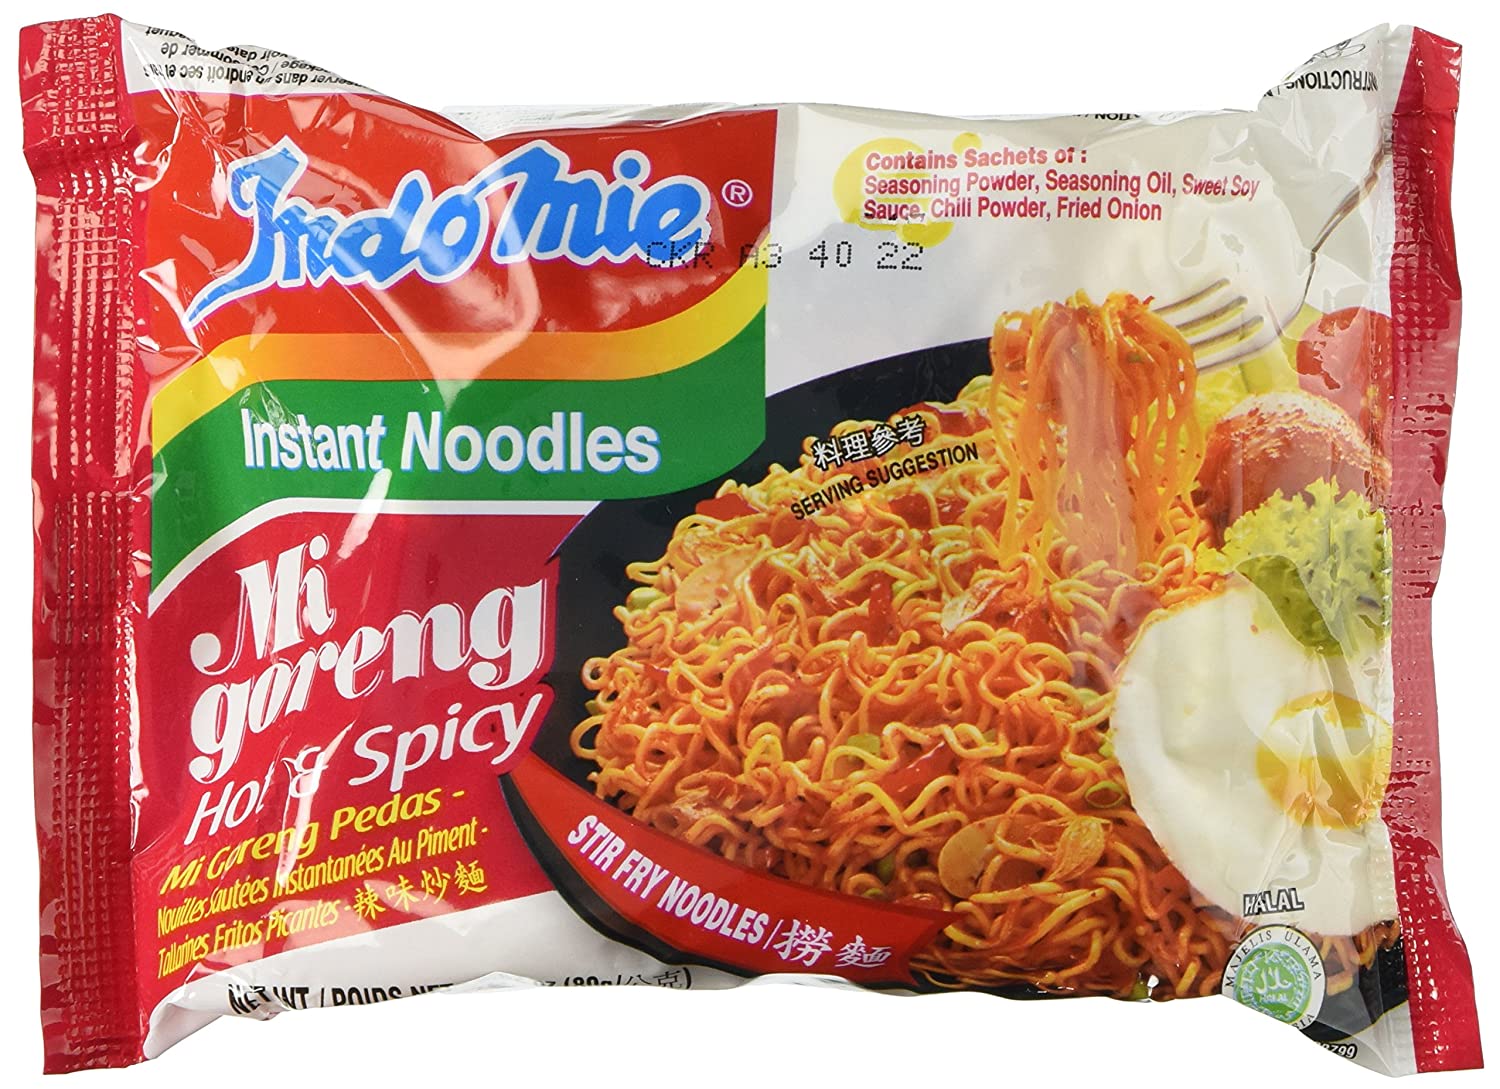 Indomie Instant Noodles: Hot & Spicy Fried Mi Goreng (5-pack